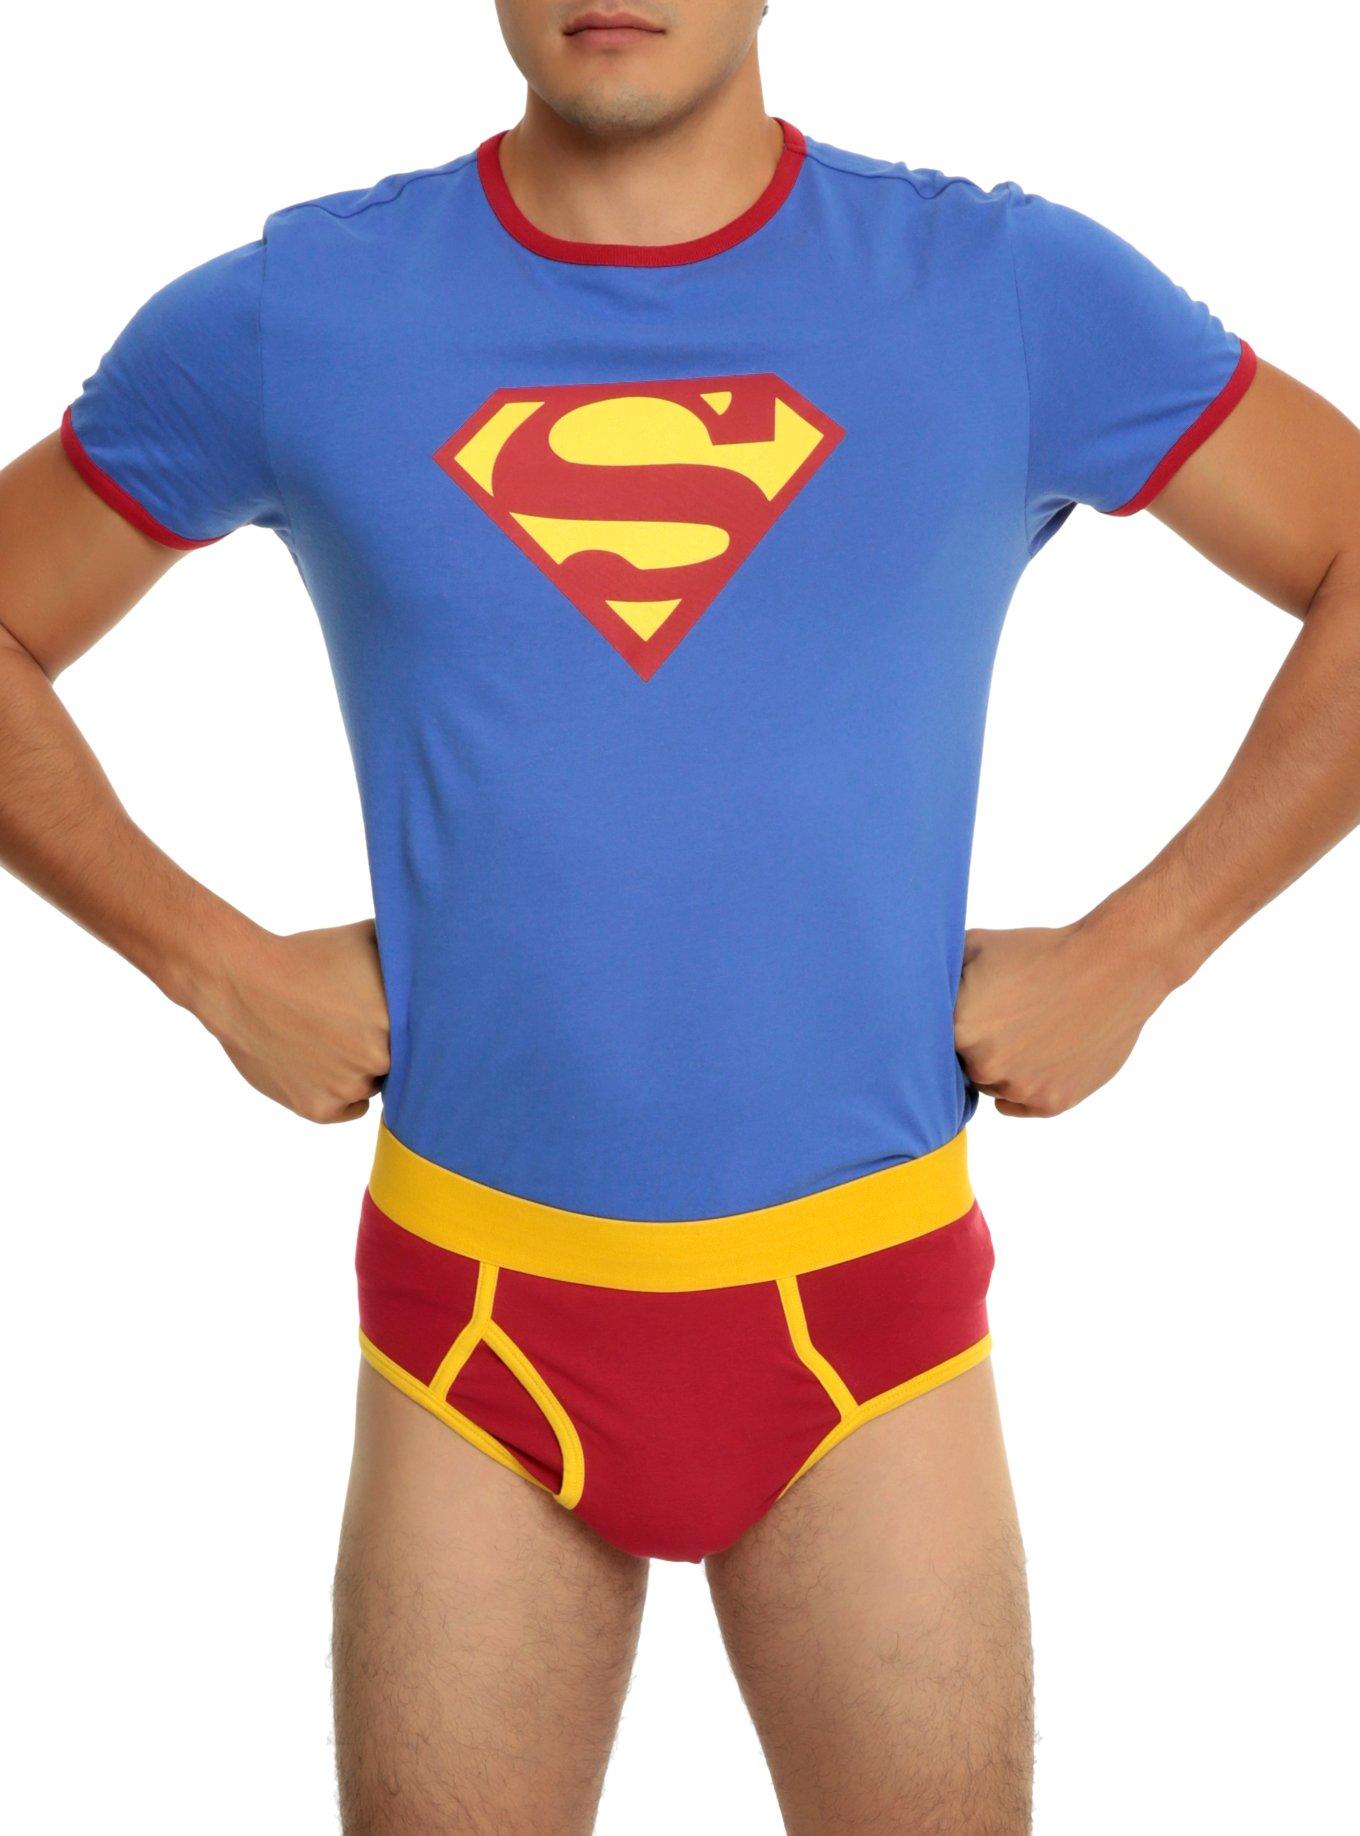 Underoos DC Comics Superman Guys Underwear Set